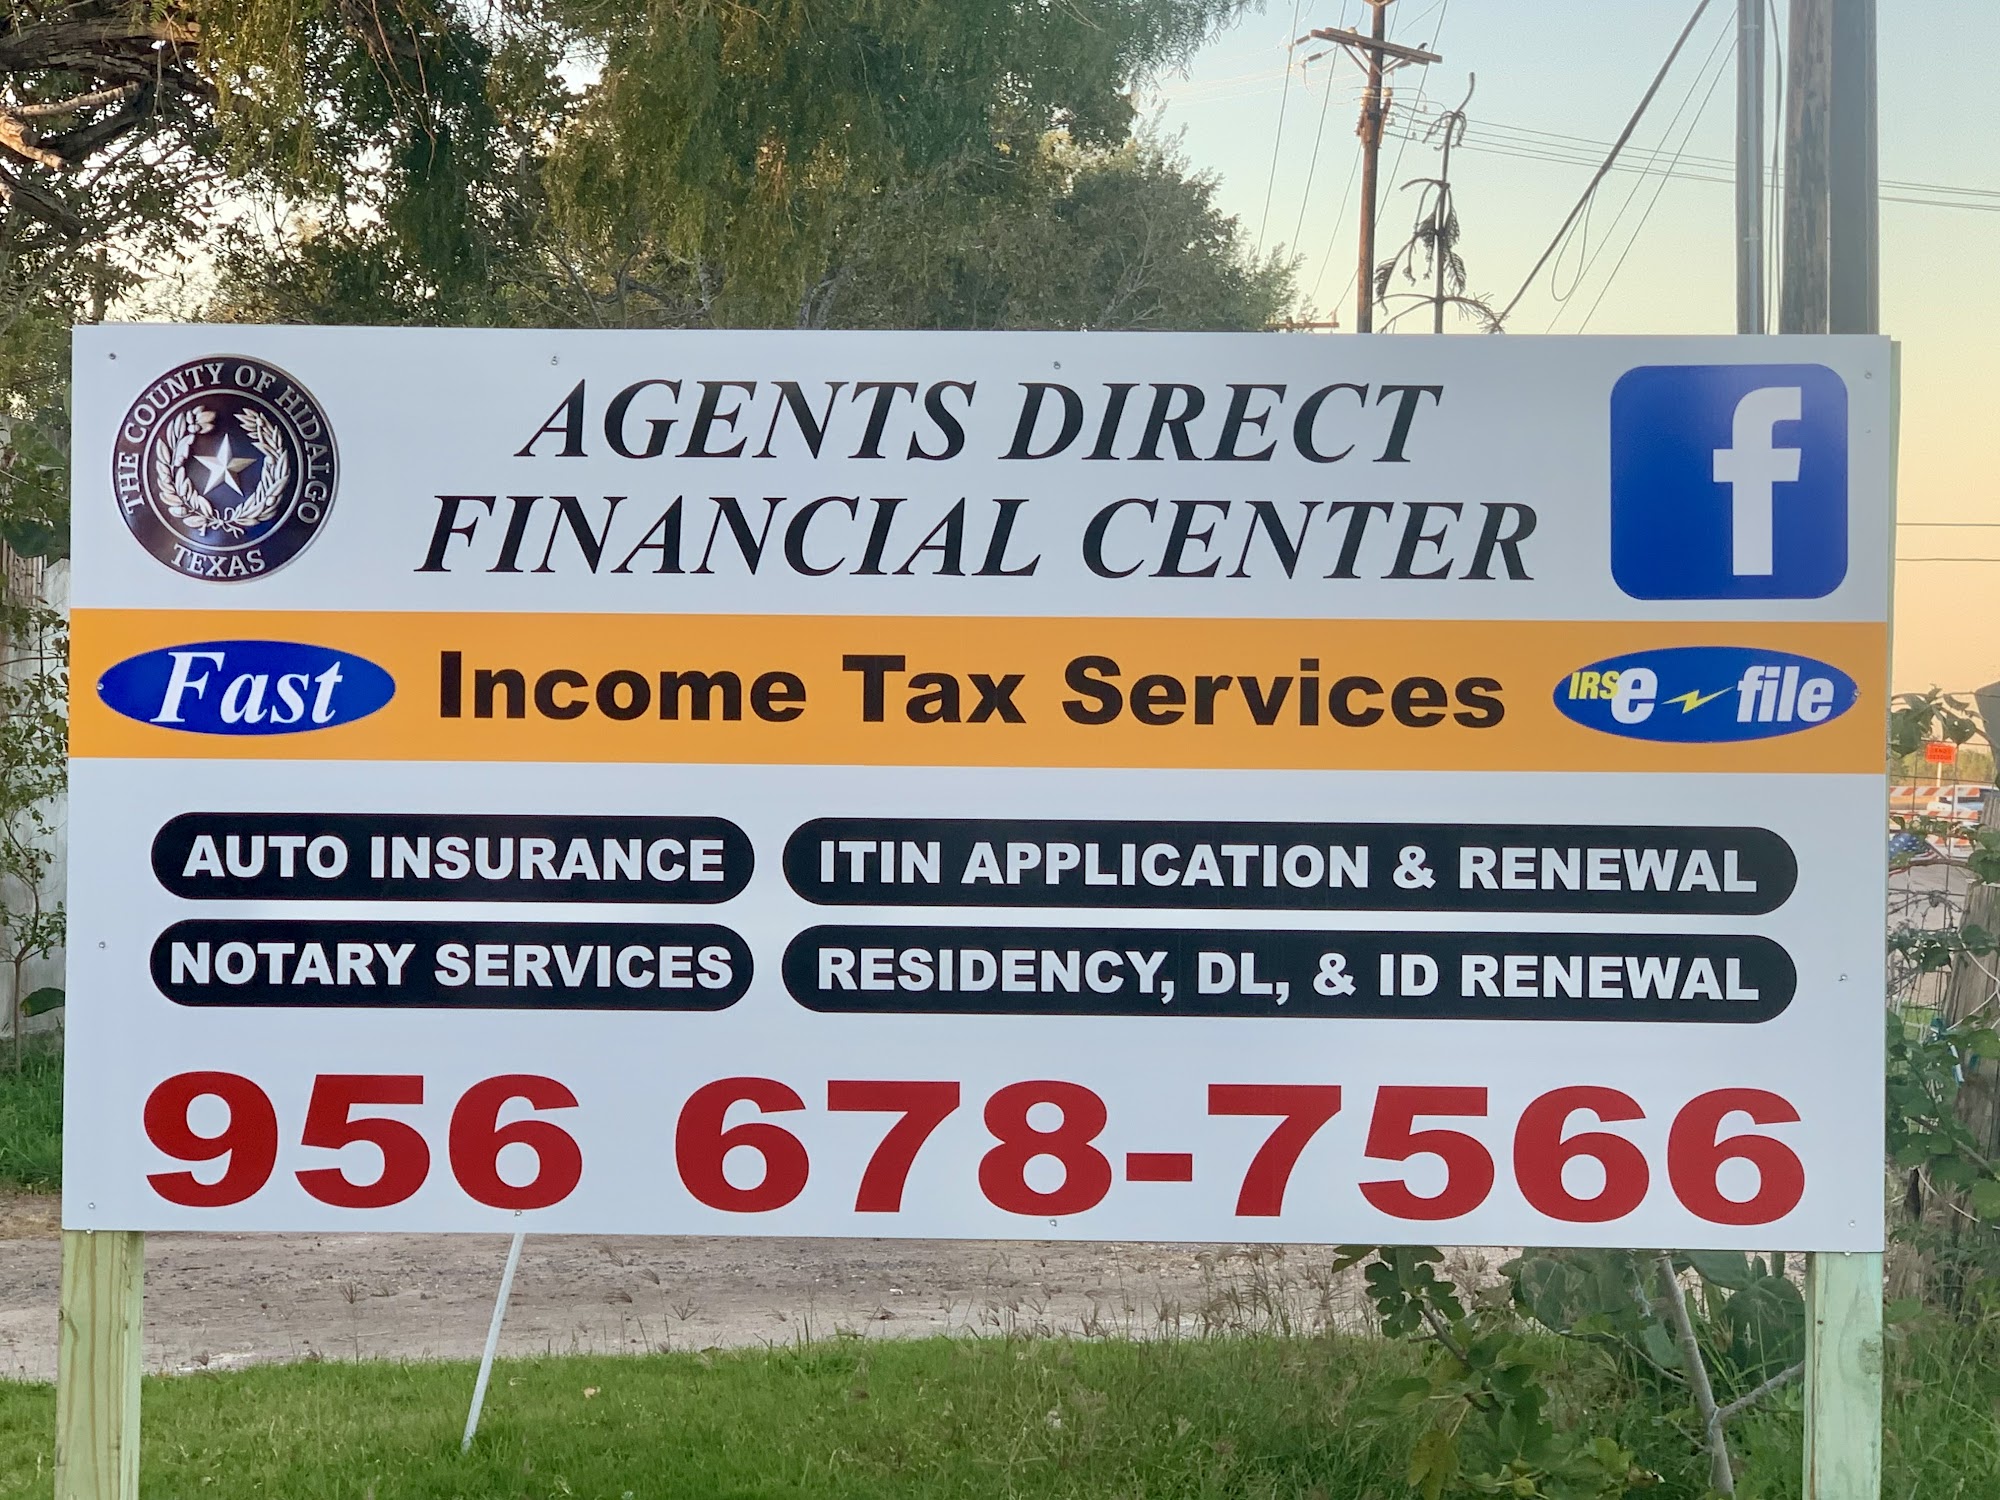 Agents Direct Financial Center / Ruiz Taxes